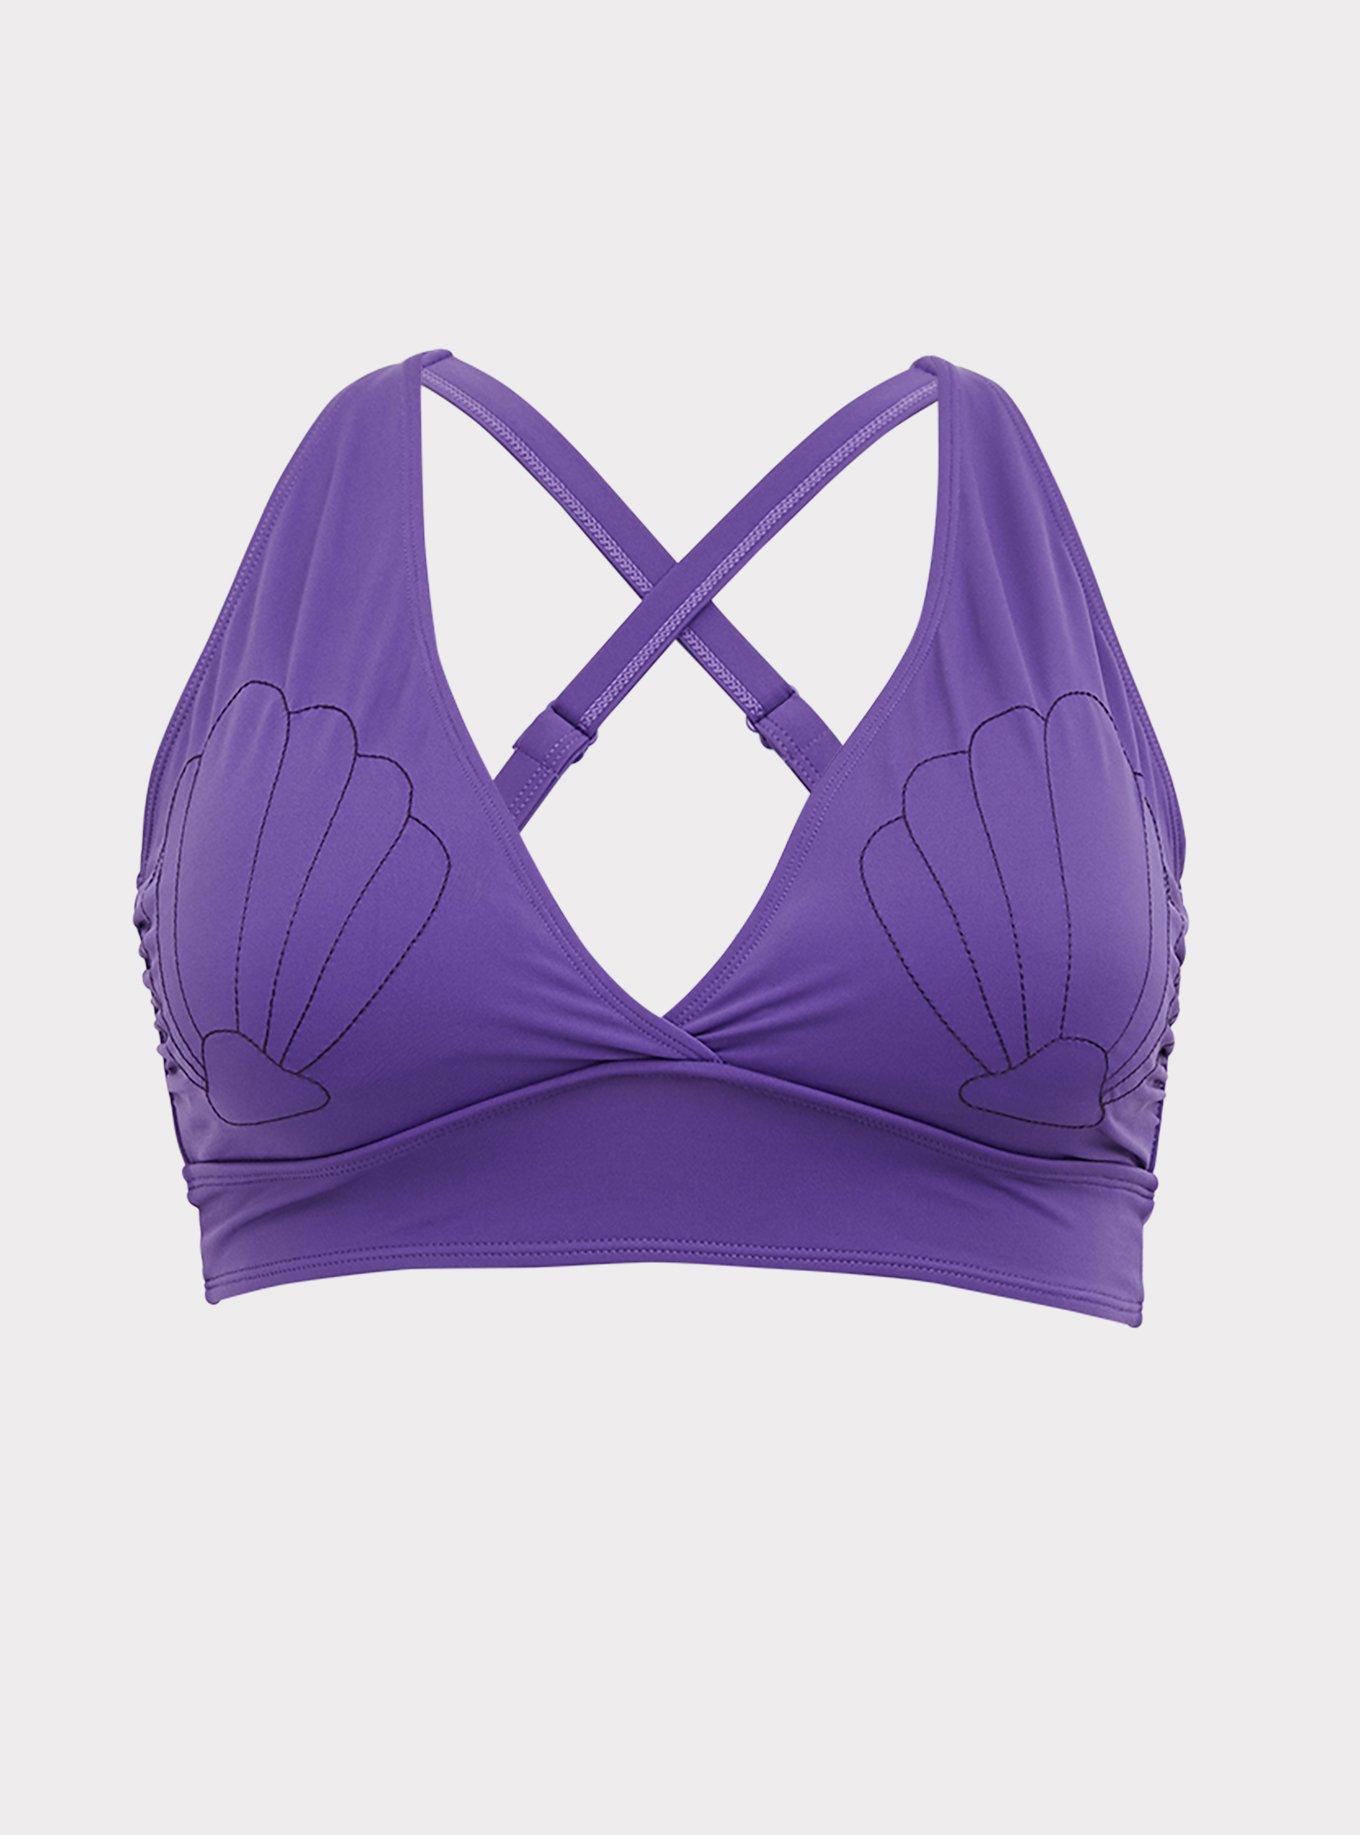 Mermaid Ombre Bikini - Seashell Bra Cups / Halter Tie top / Lavender / Blue